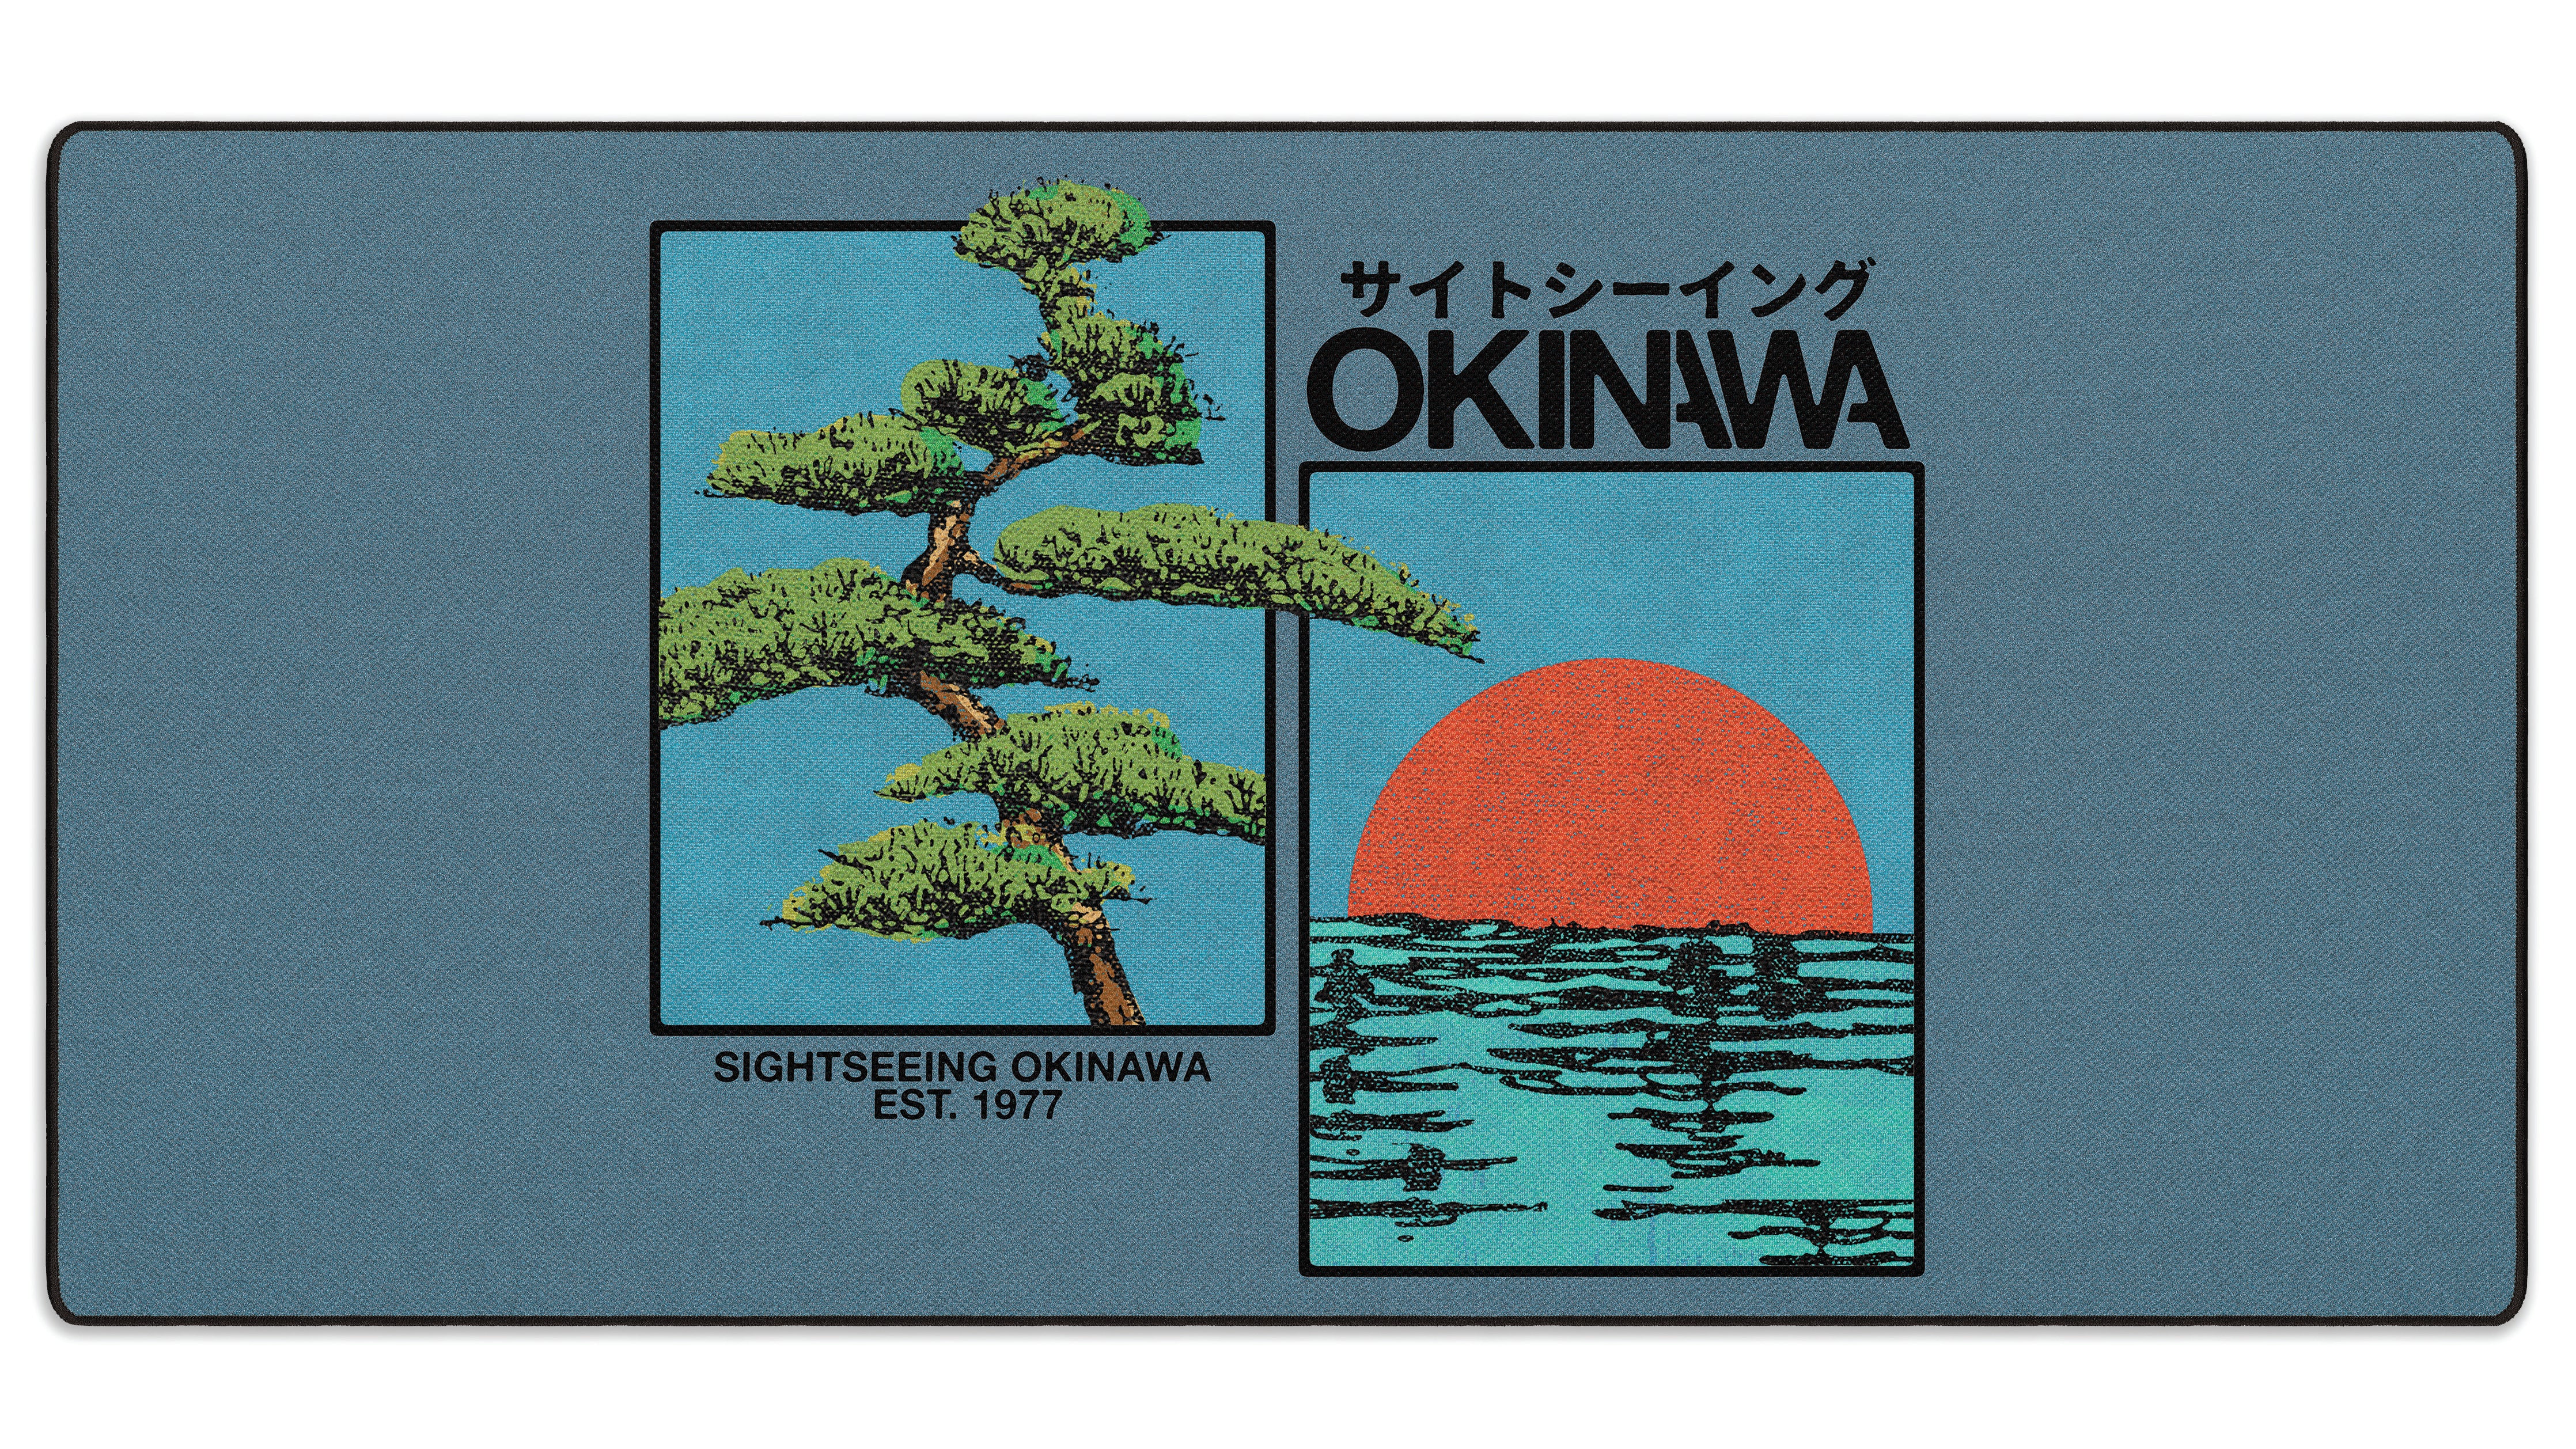 Okinawa by OZGMX - The Mousepad Company